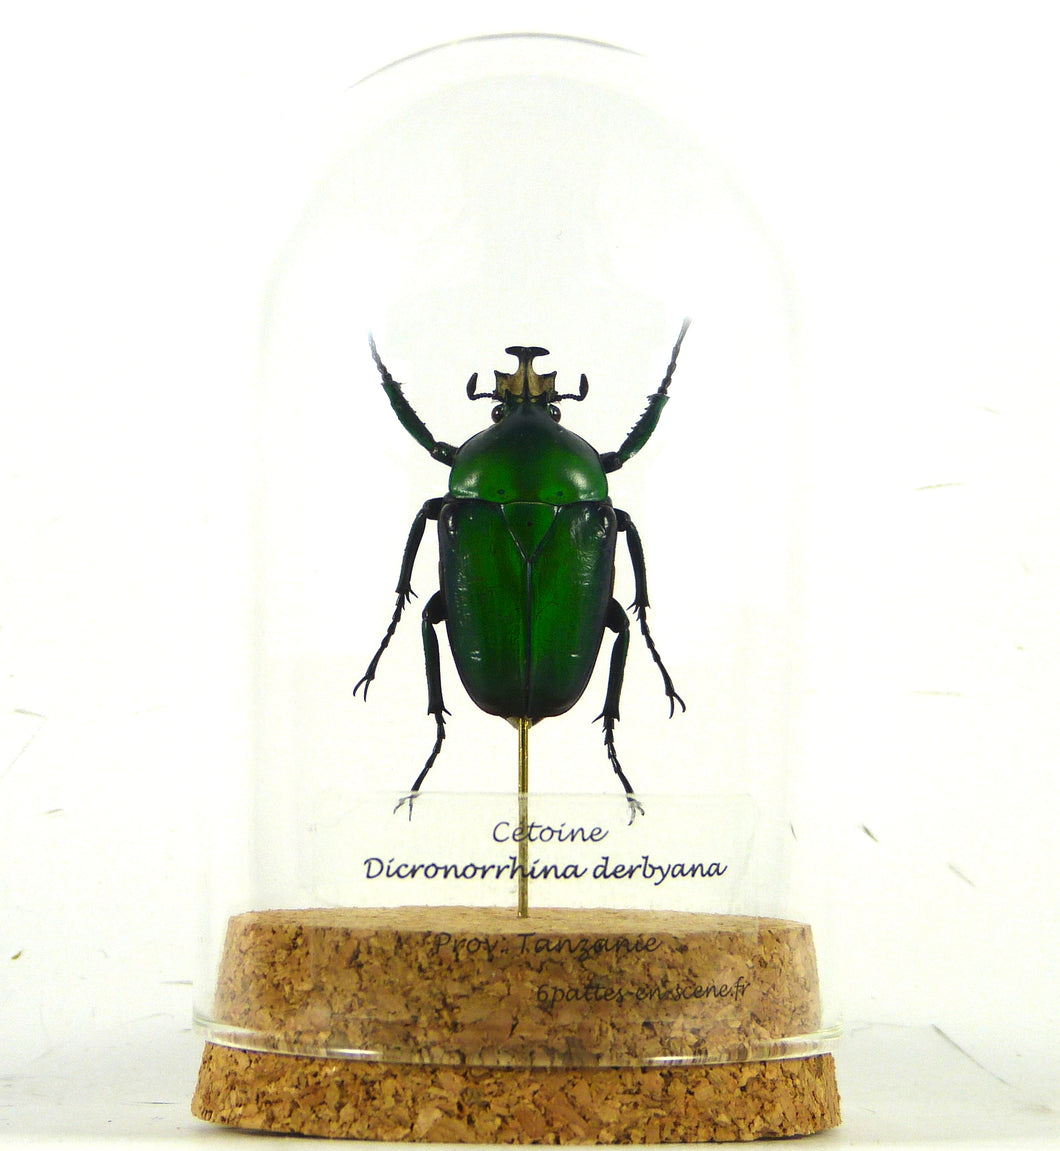 Coléoptère cétoine Dicronorrhina derbyana - insecte sous globe, cloche